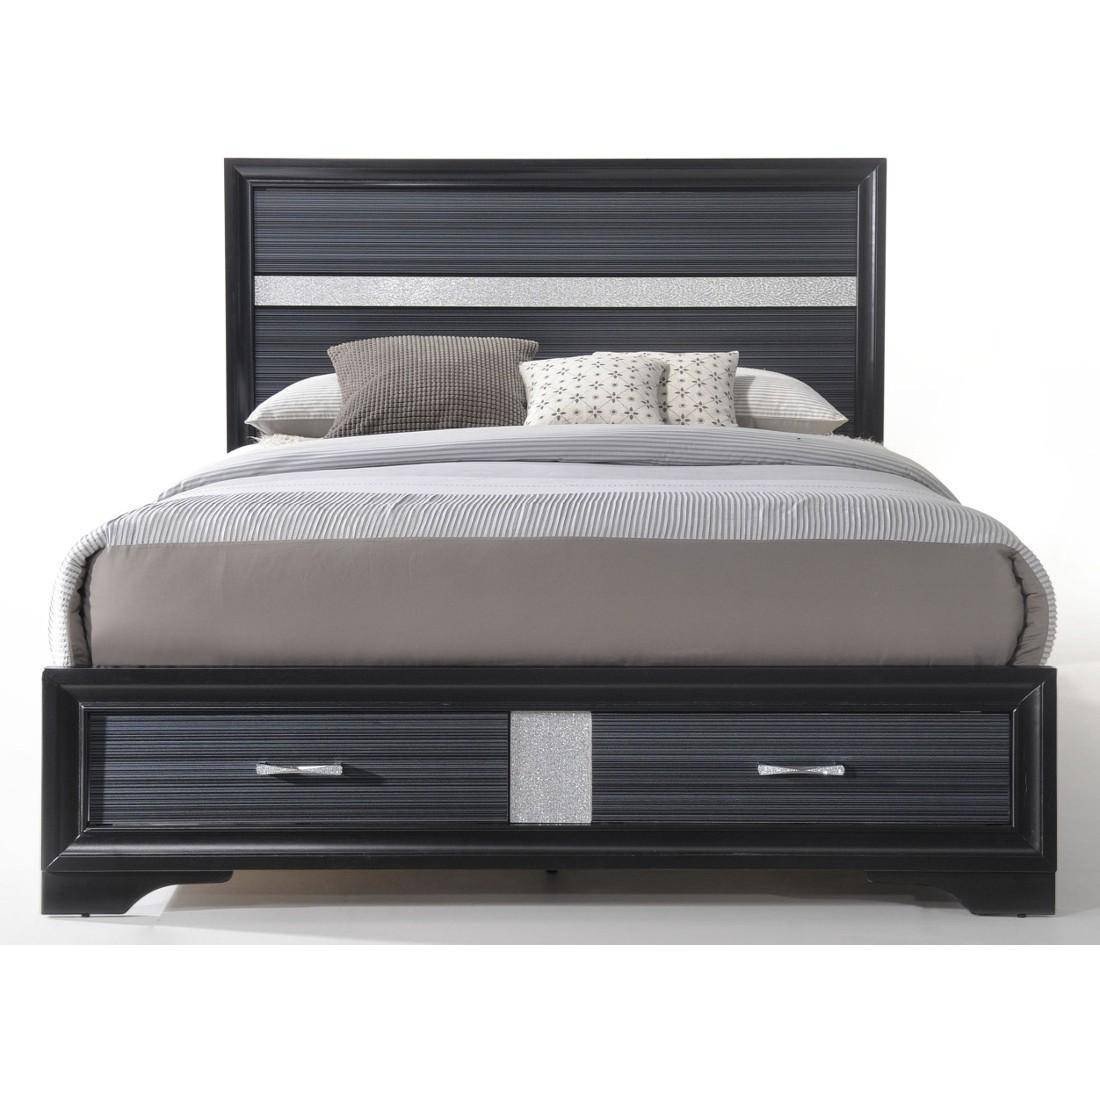 Bedroom Furniture for Sale Lovely Black Wood Queen Storage Bedroom Set 4pcs Naima Q Acme